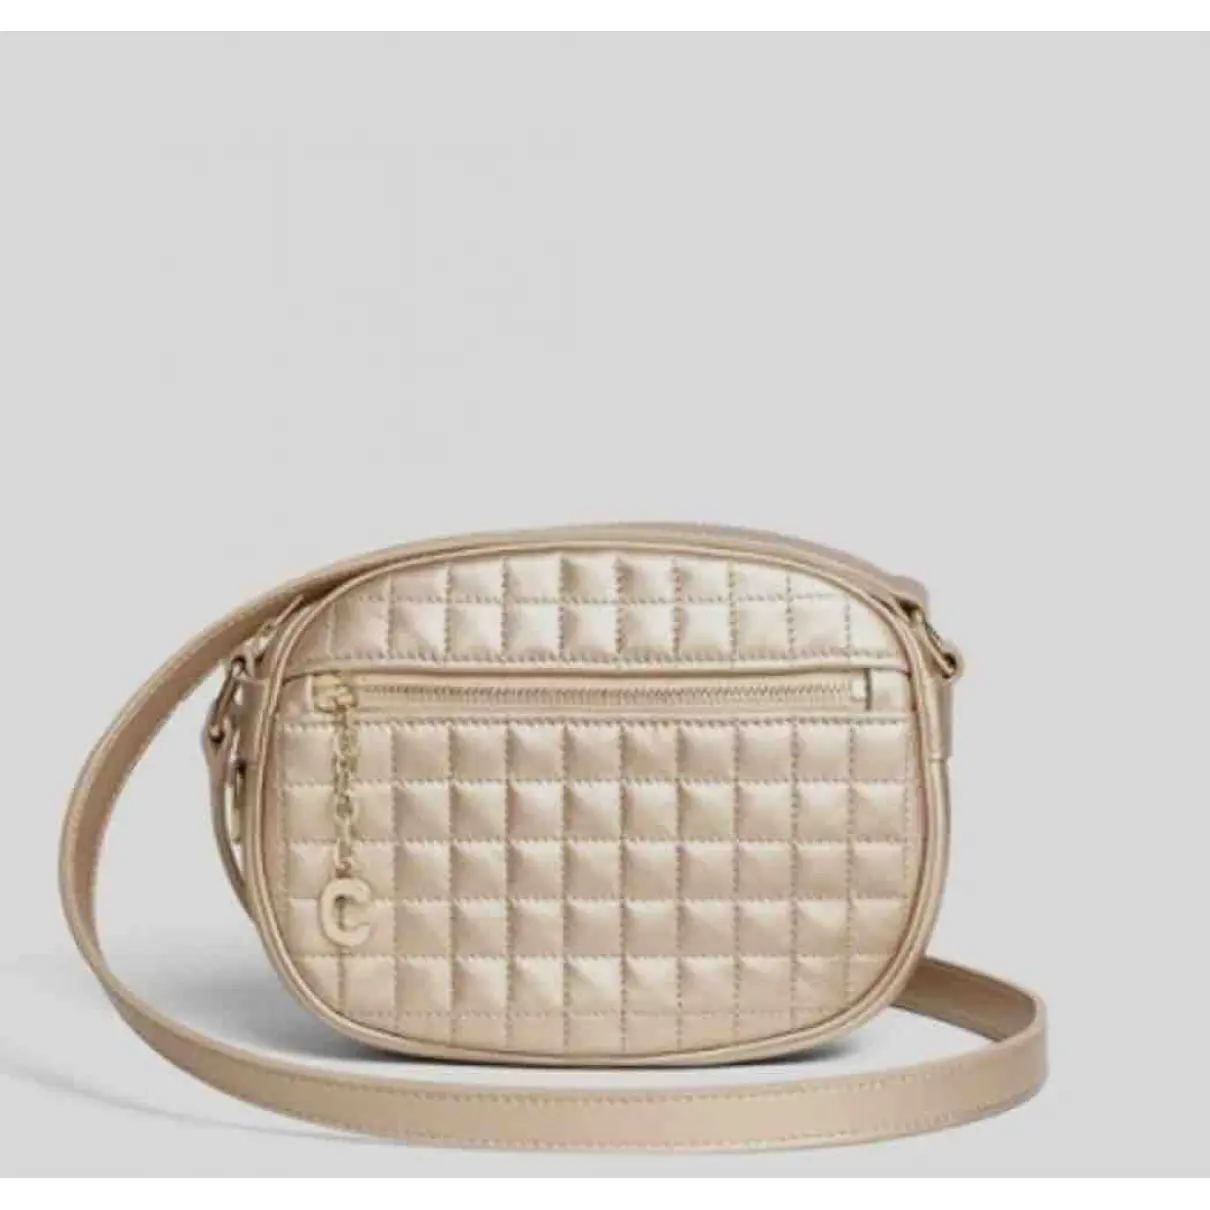 Buy Celine Charm leather handbag online